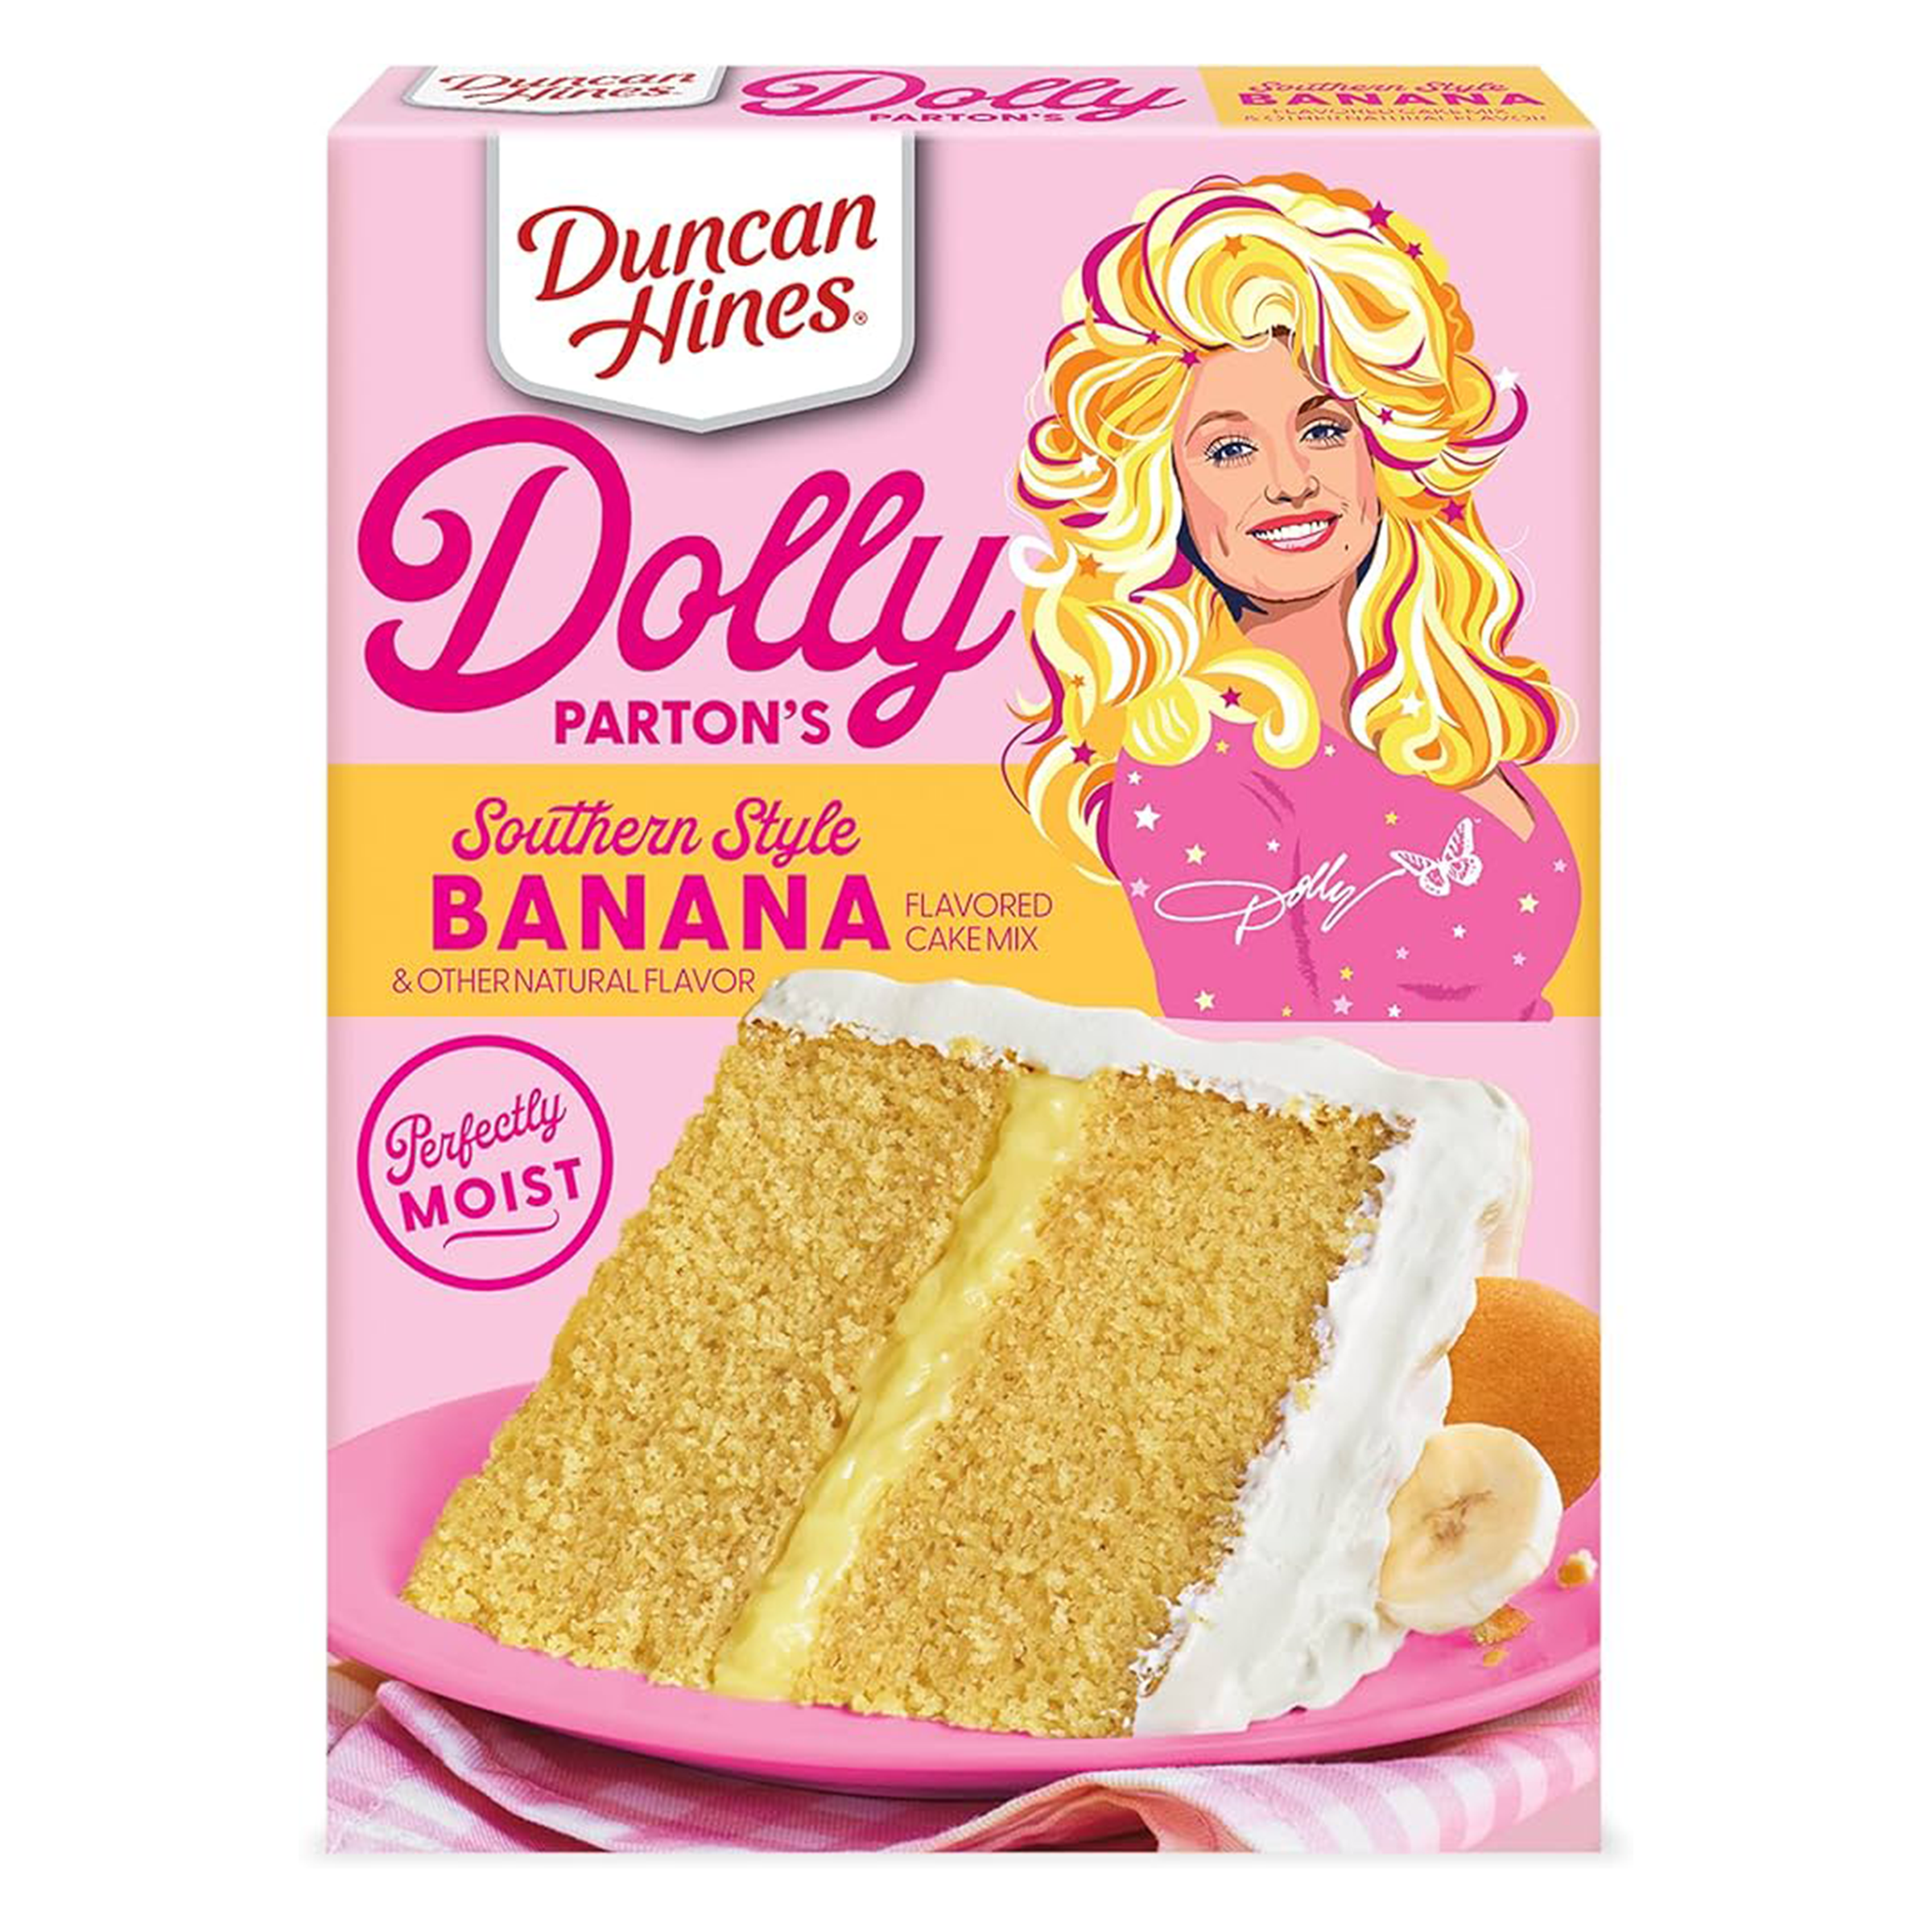 Dolly Parton’s - Southern Style Banana